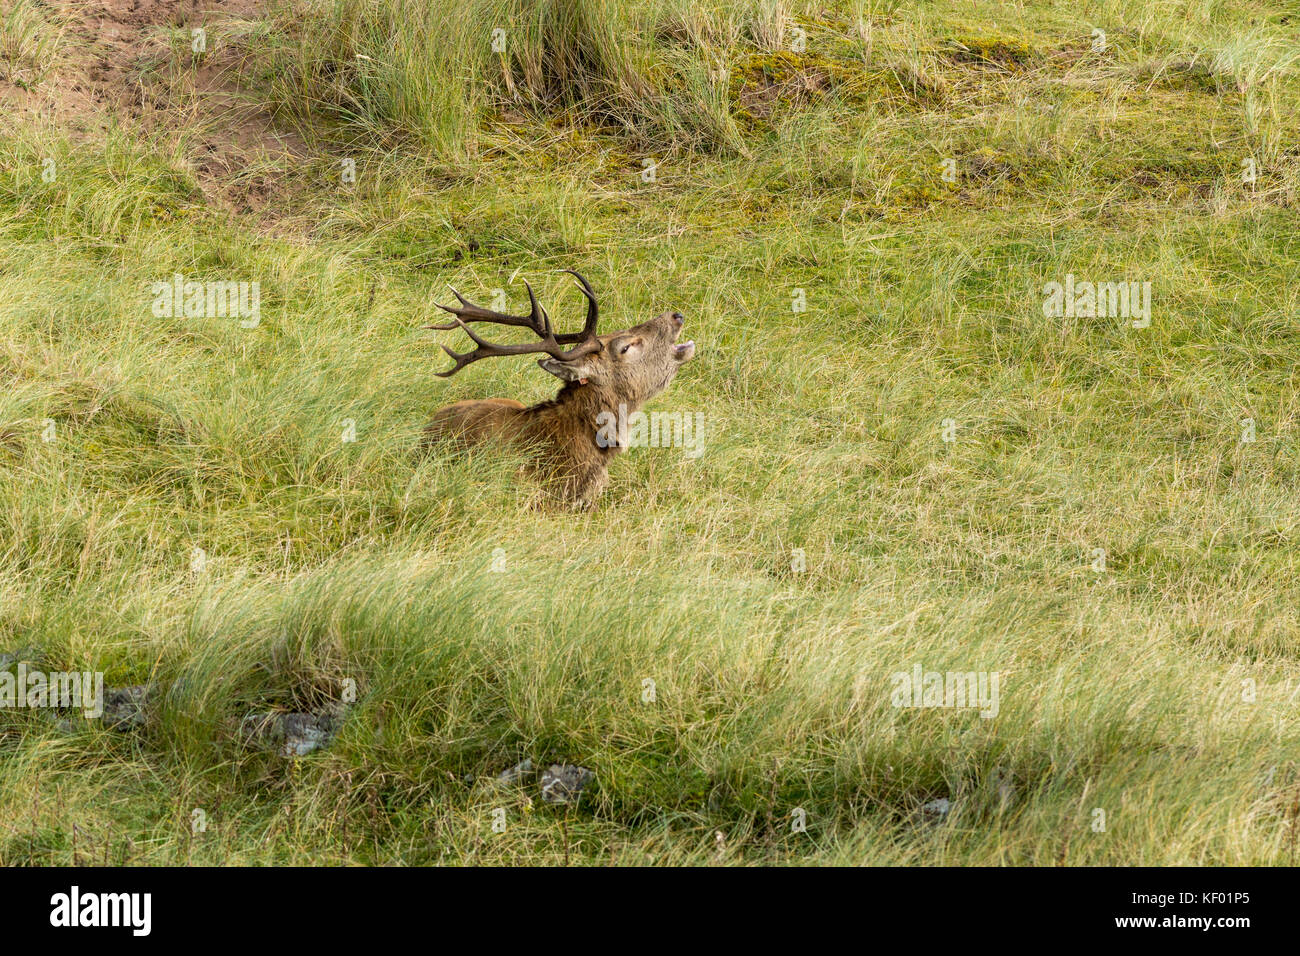 Red deer stag (Cervus elaphus scoticus) calling during the rusting season in the wild. Stock Photo